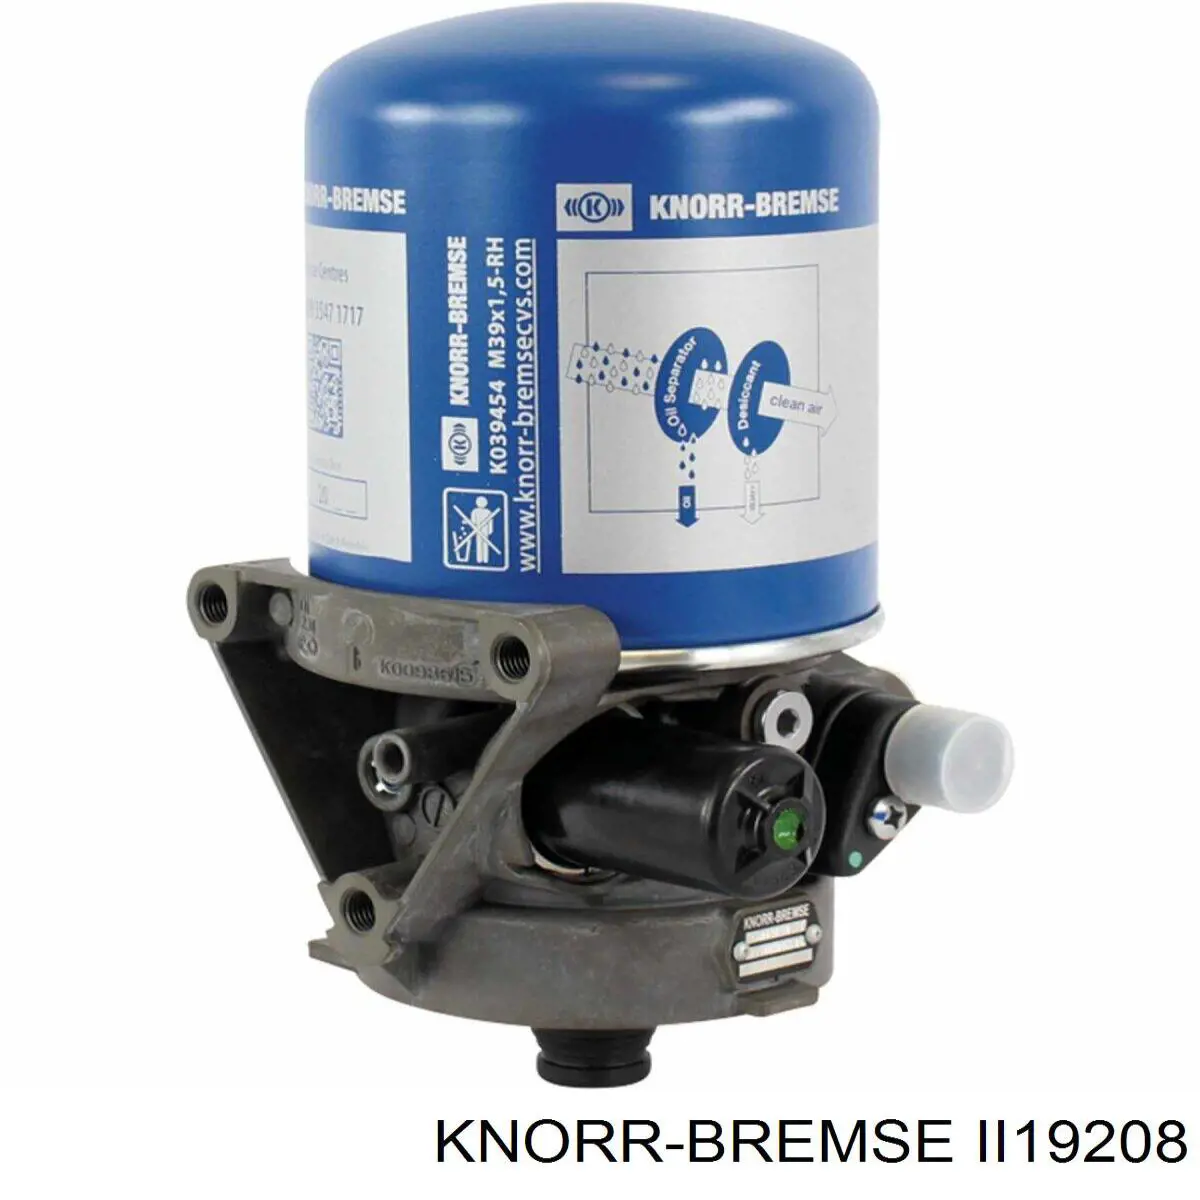 II19208 Knorr-bremse осушувач повітря пневматичної системи